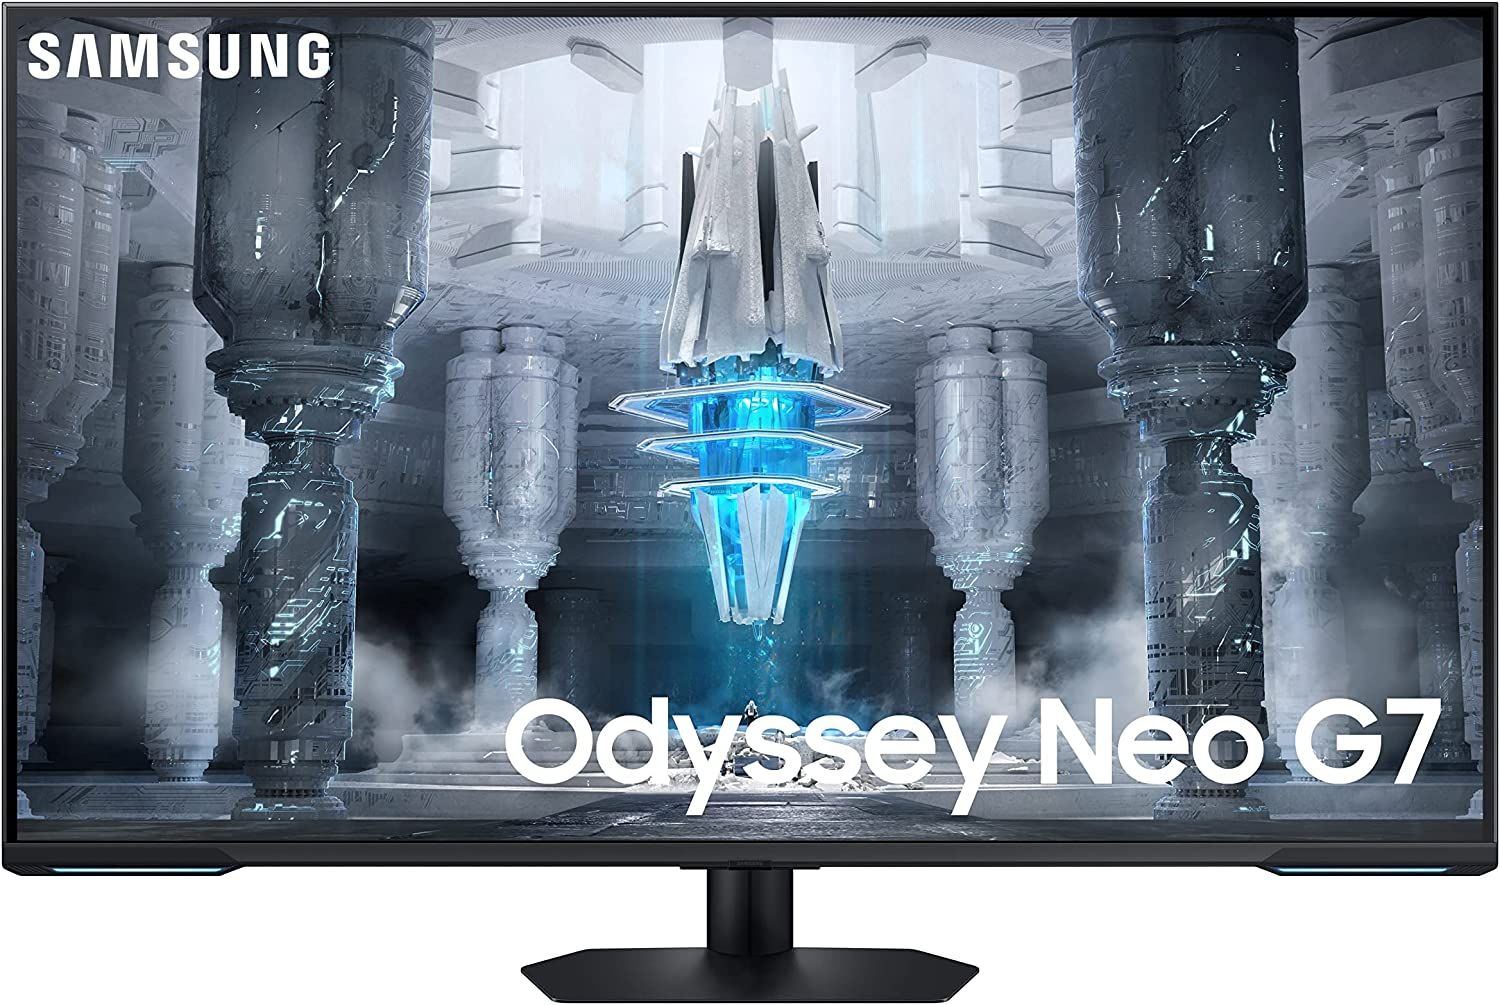 43-inch Samsung Odyssey Neo G7